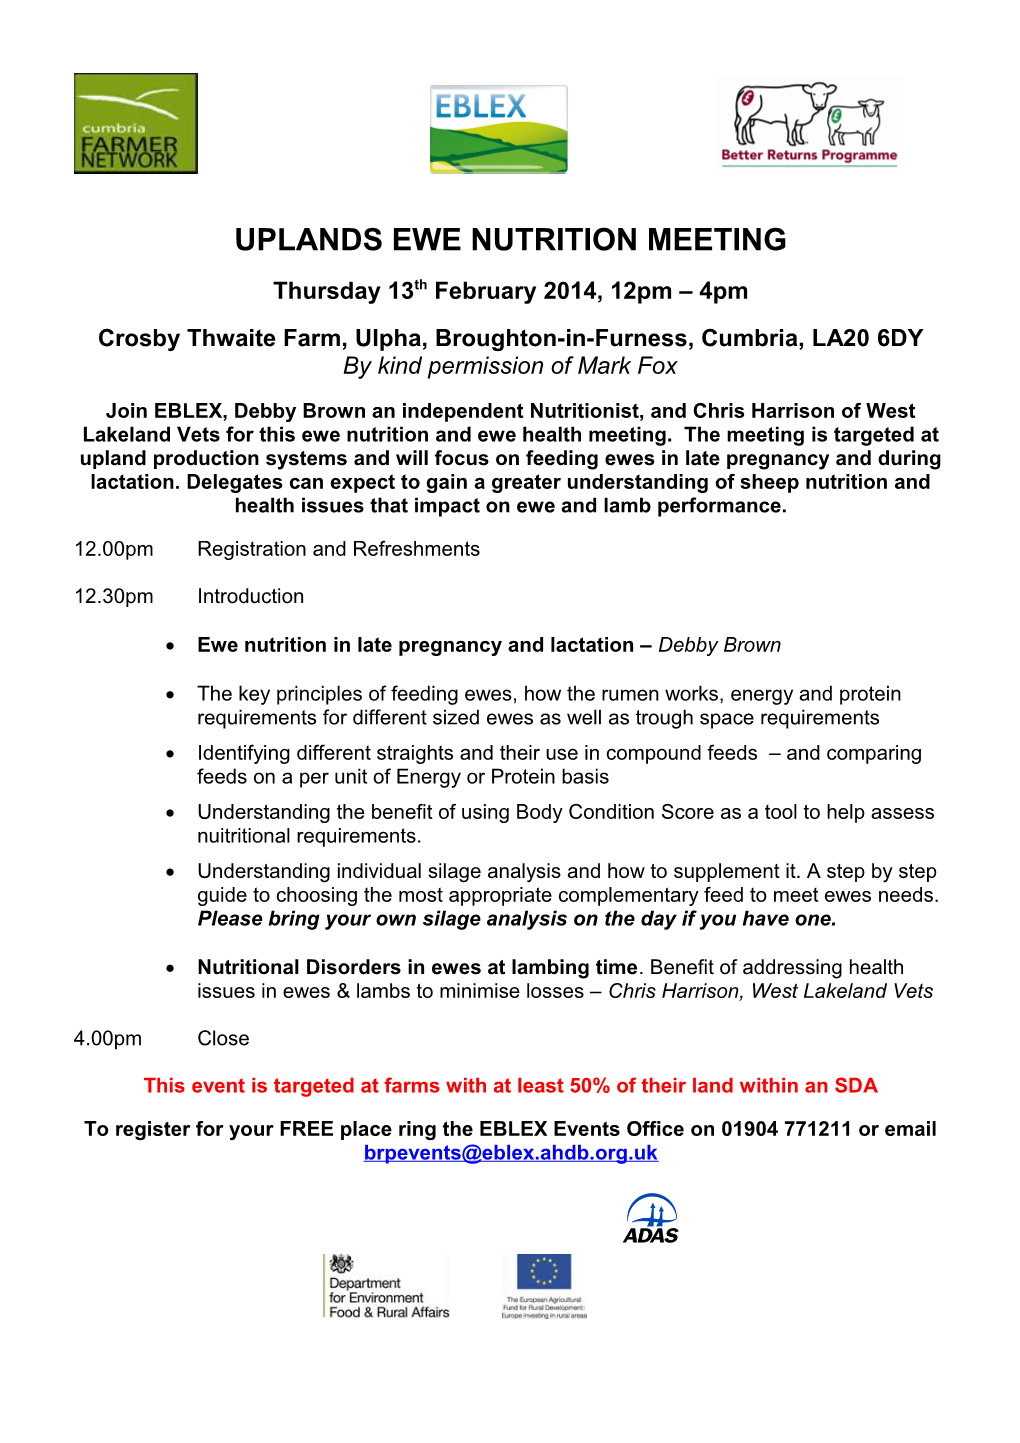 Uplands Ewe Nutrition Meeting